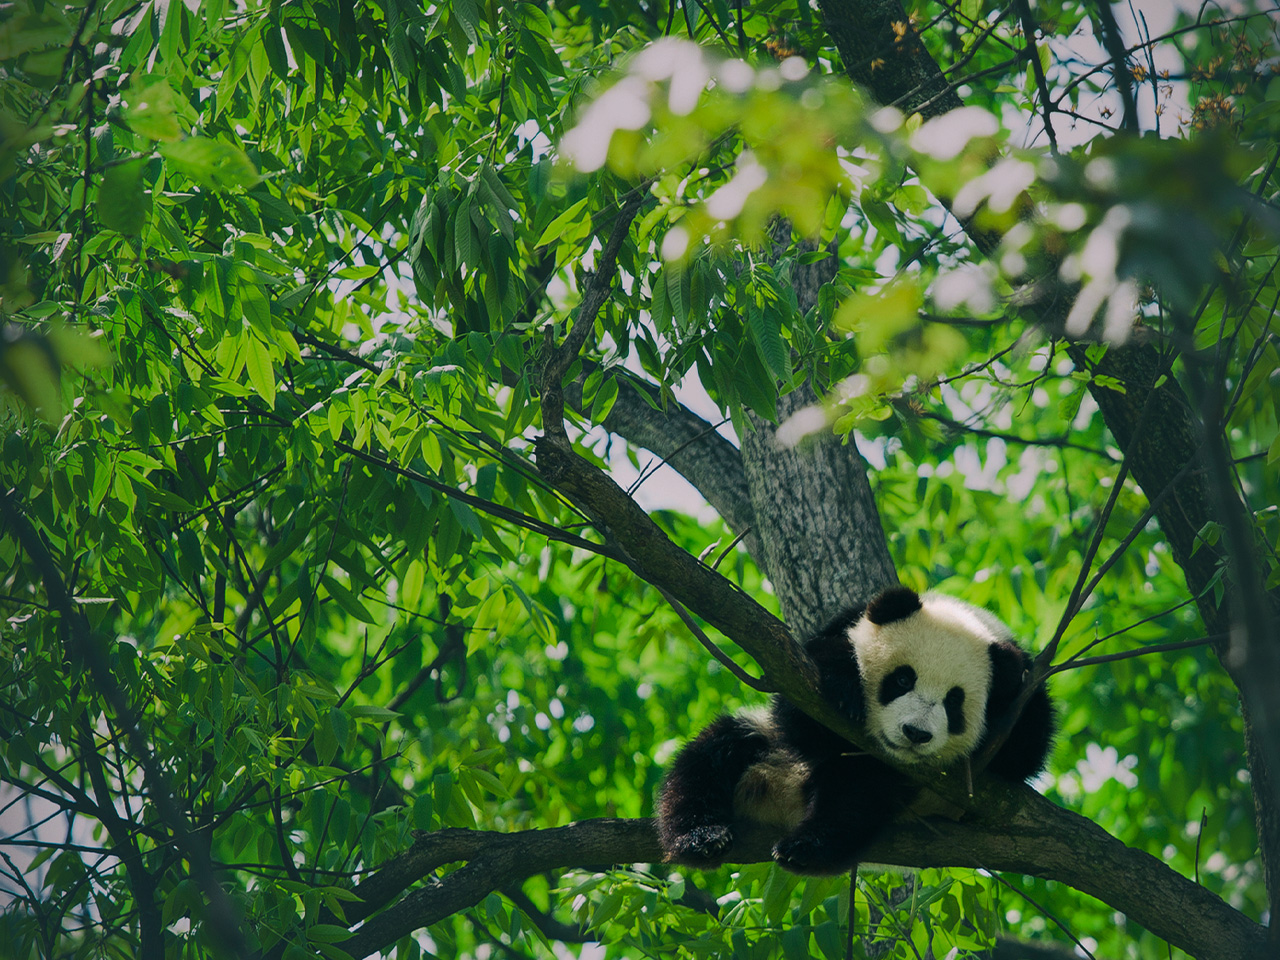 Giant Panda Habitat